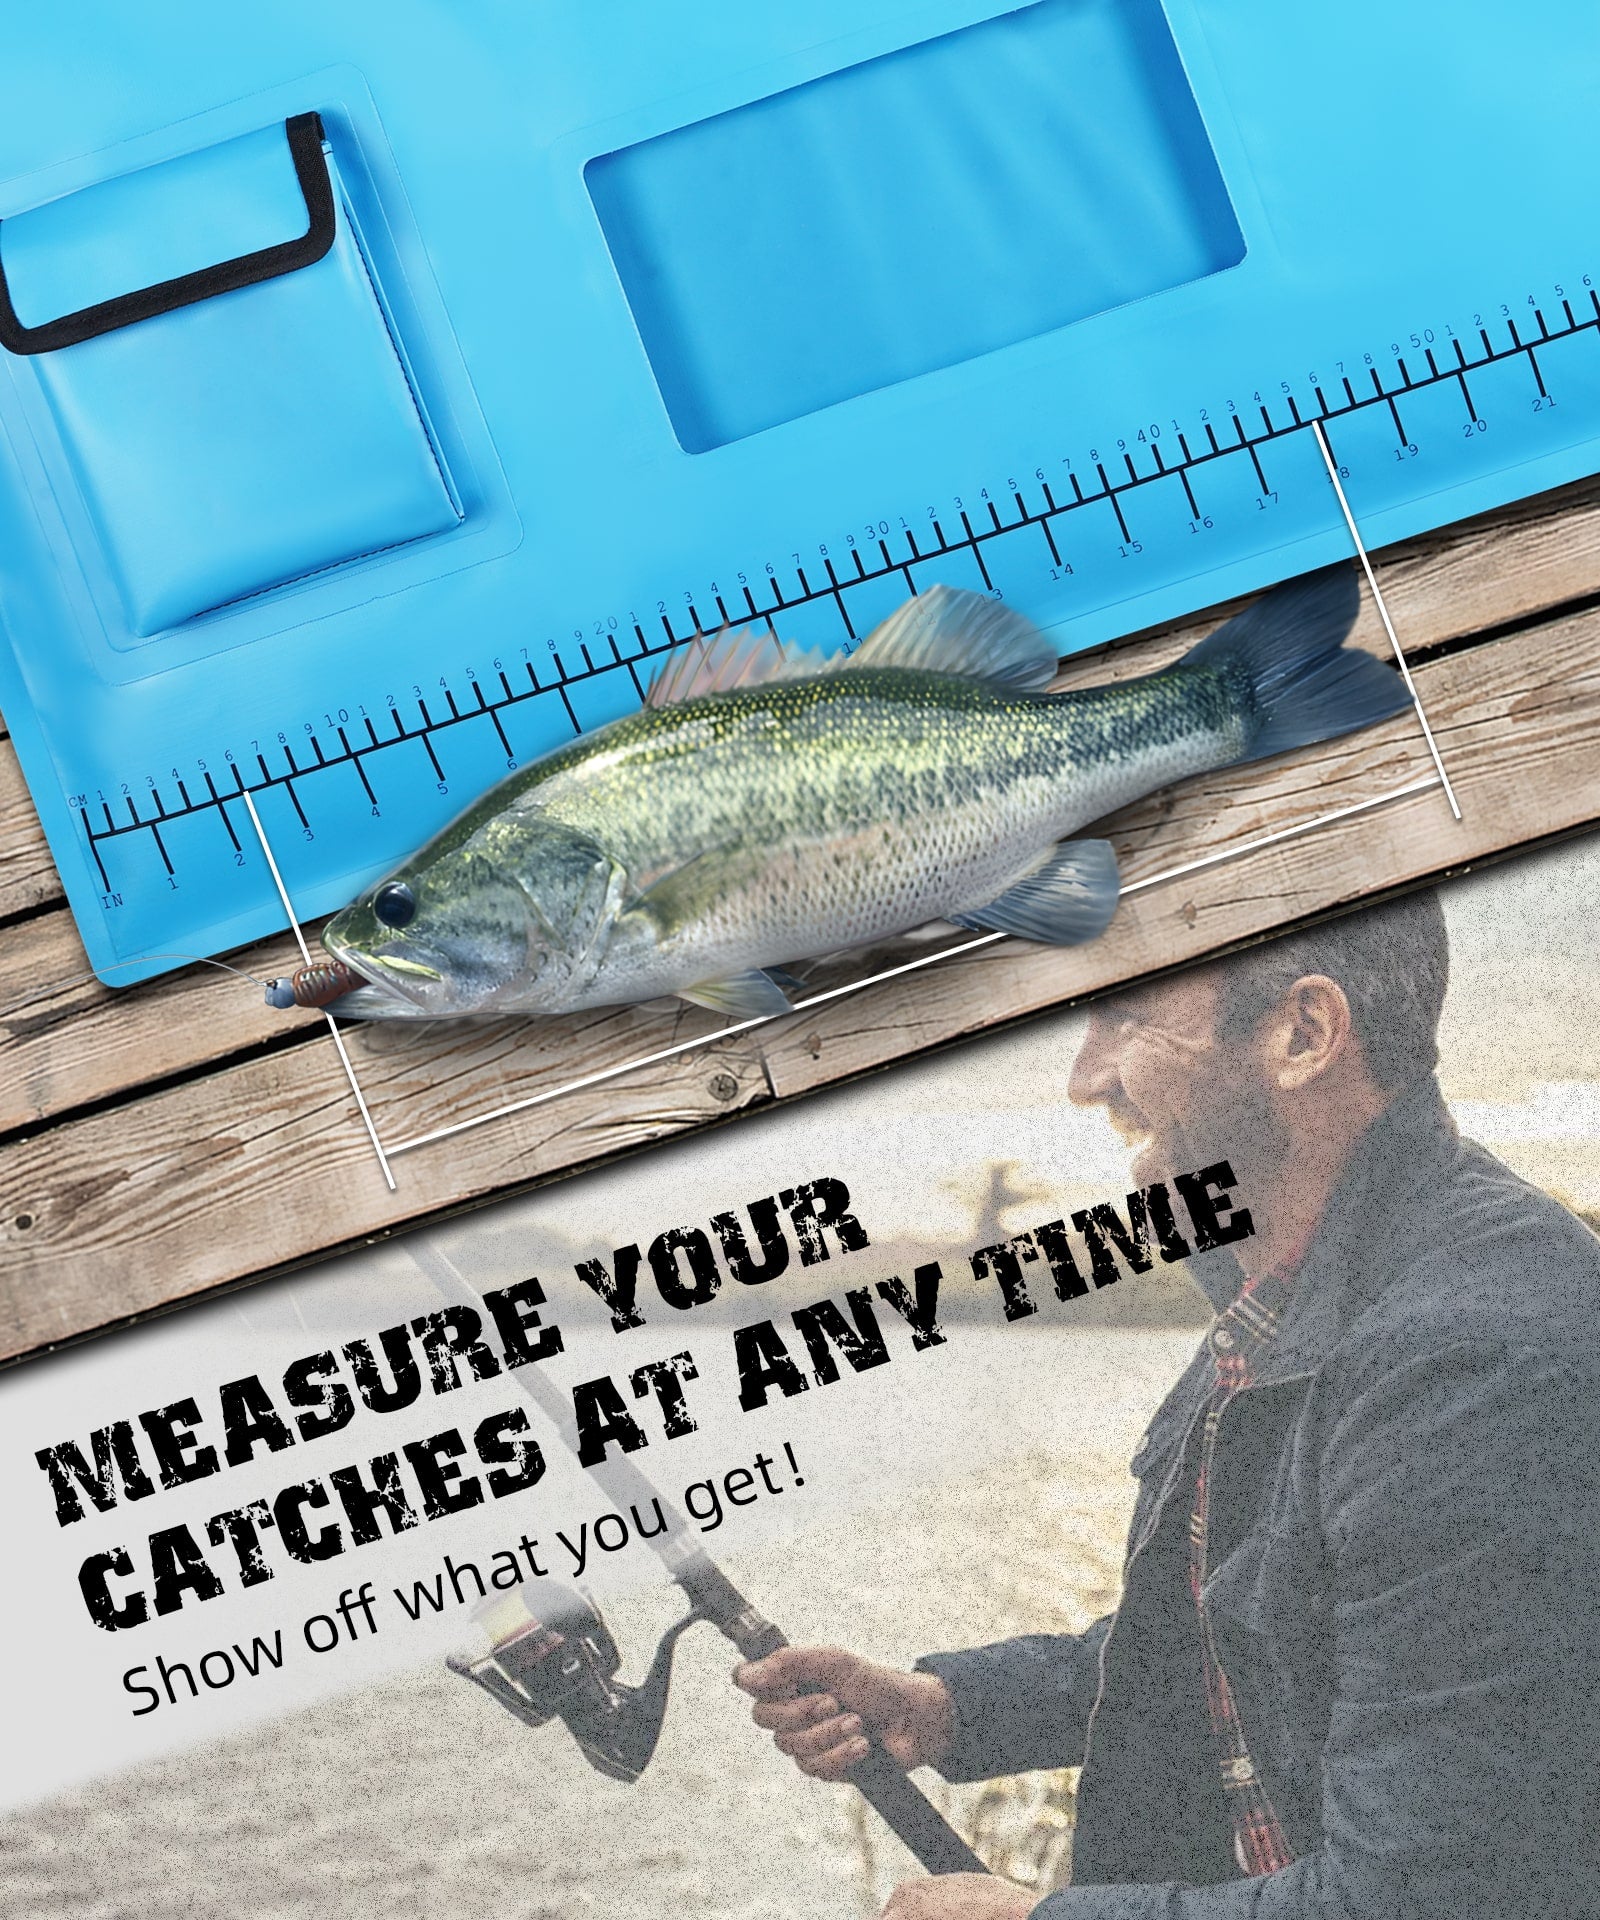 ARCFOX Fish Tournament Bag Removable Mesh Bag See-through Pocket